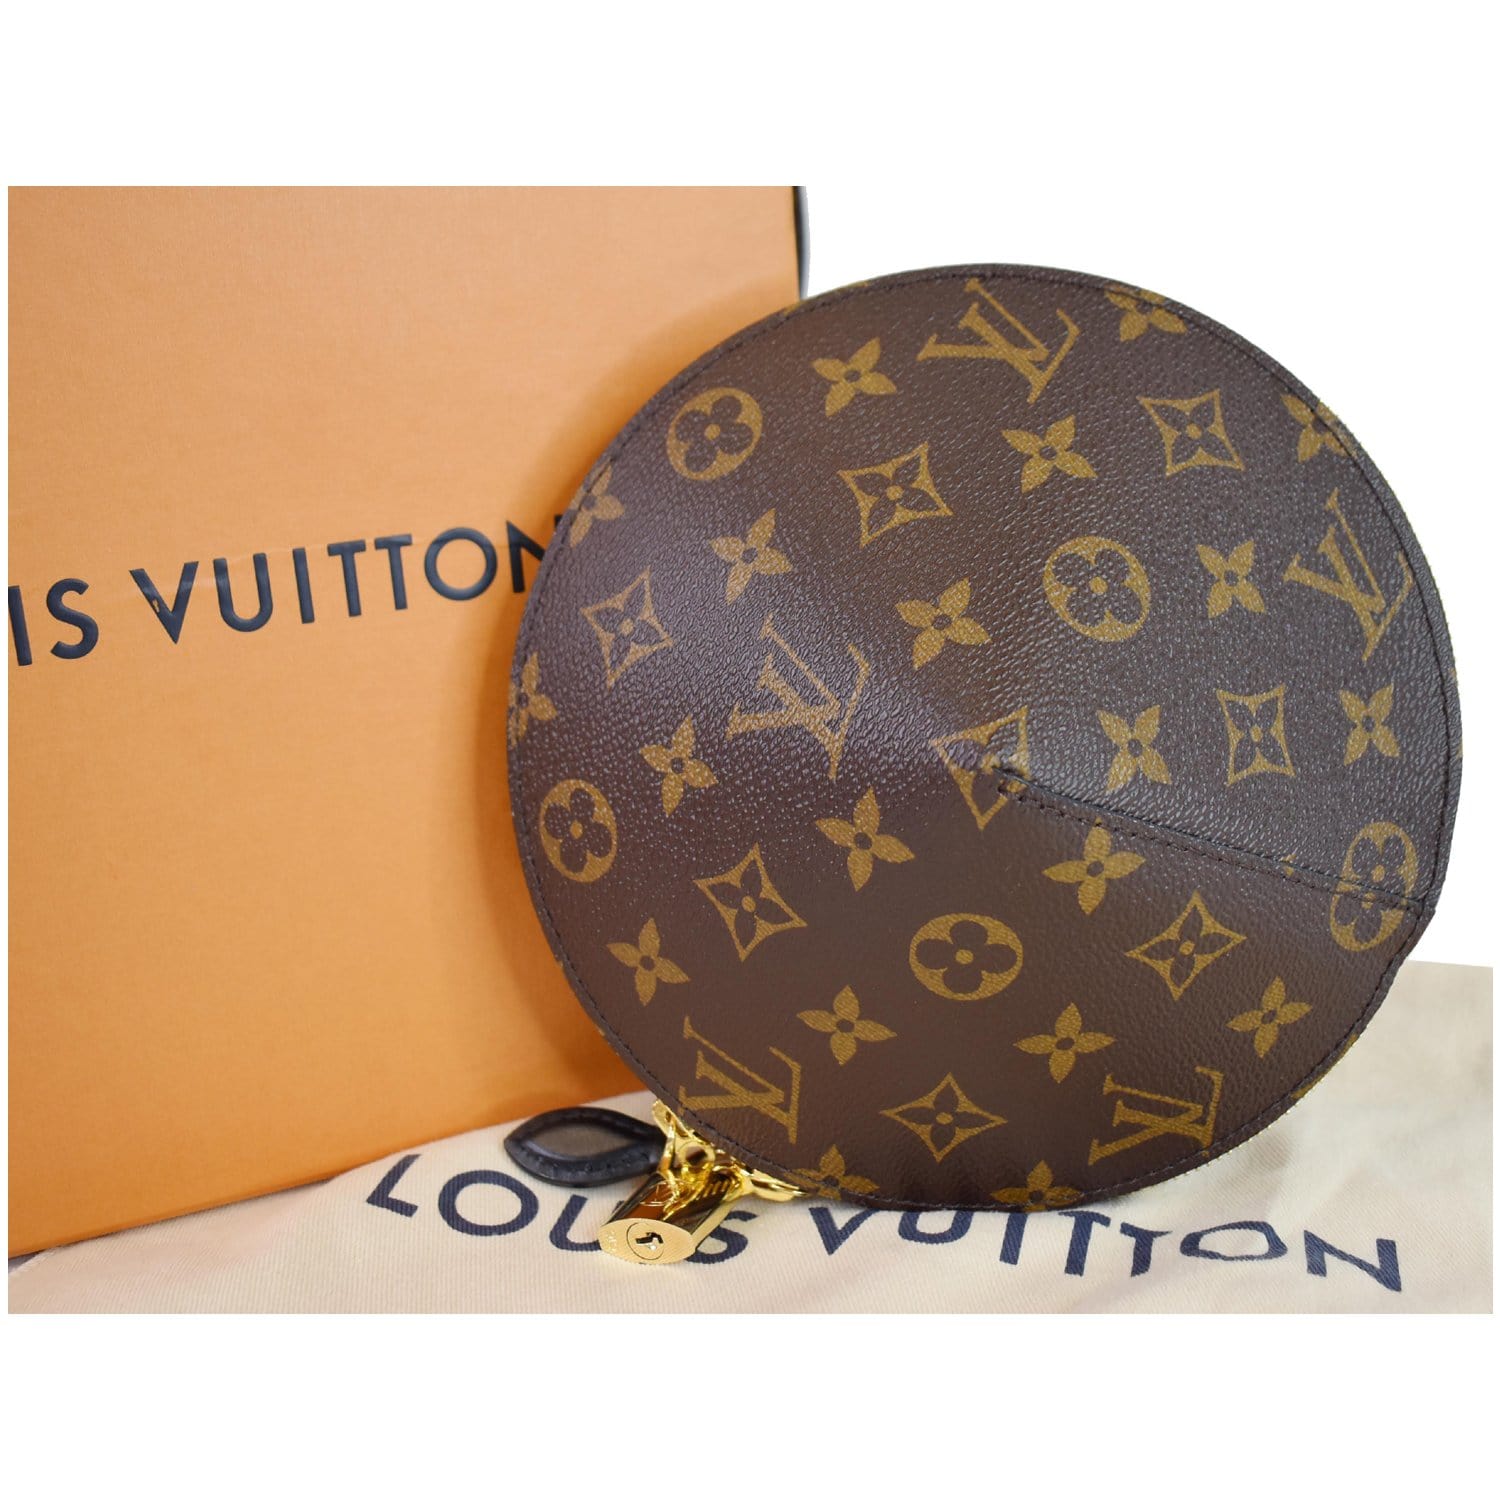 Louis Vuitton Toupie Monogram Canvas mini Bag.